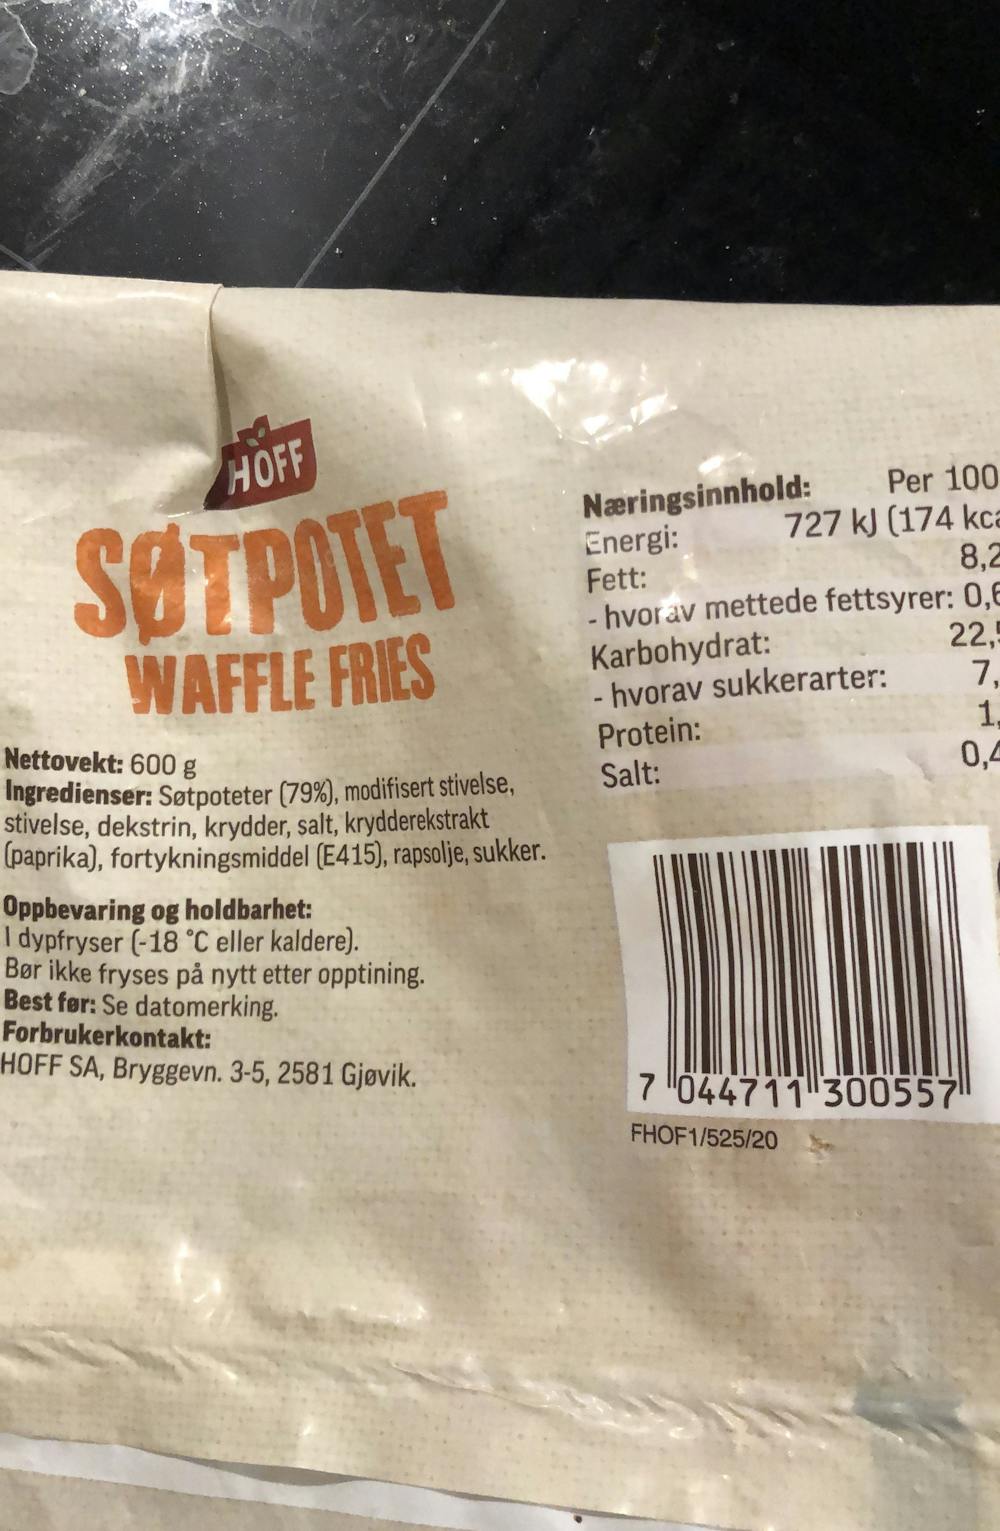 Ingredienslisten til Hoff Søtpotet waffle fries